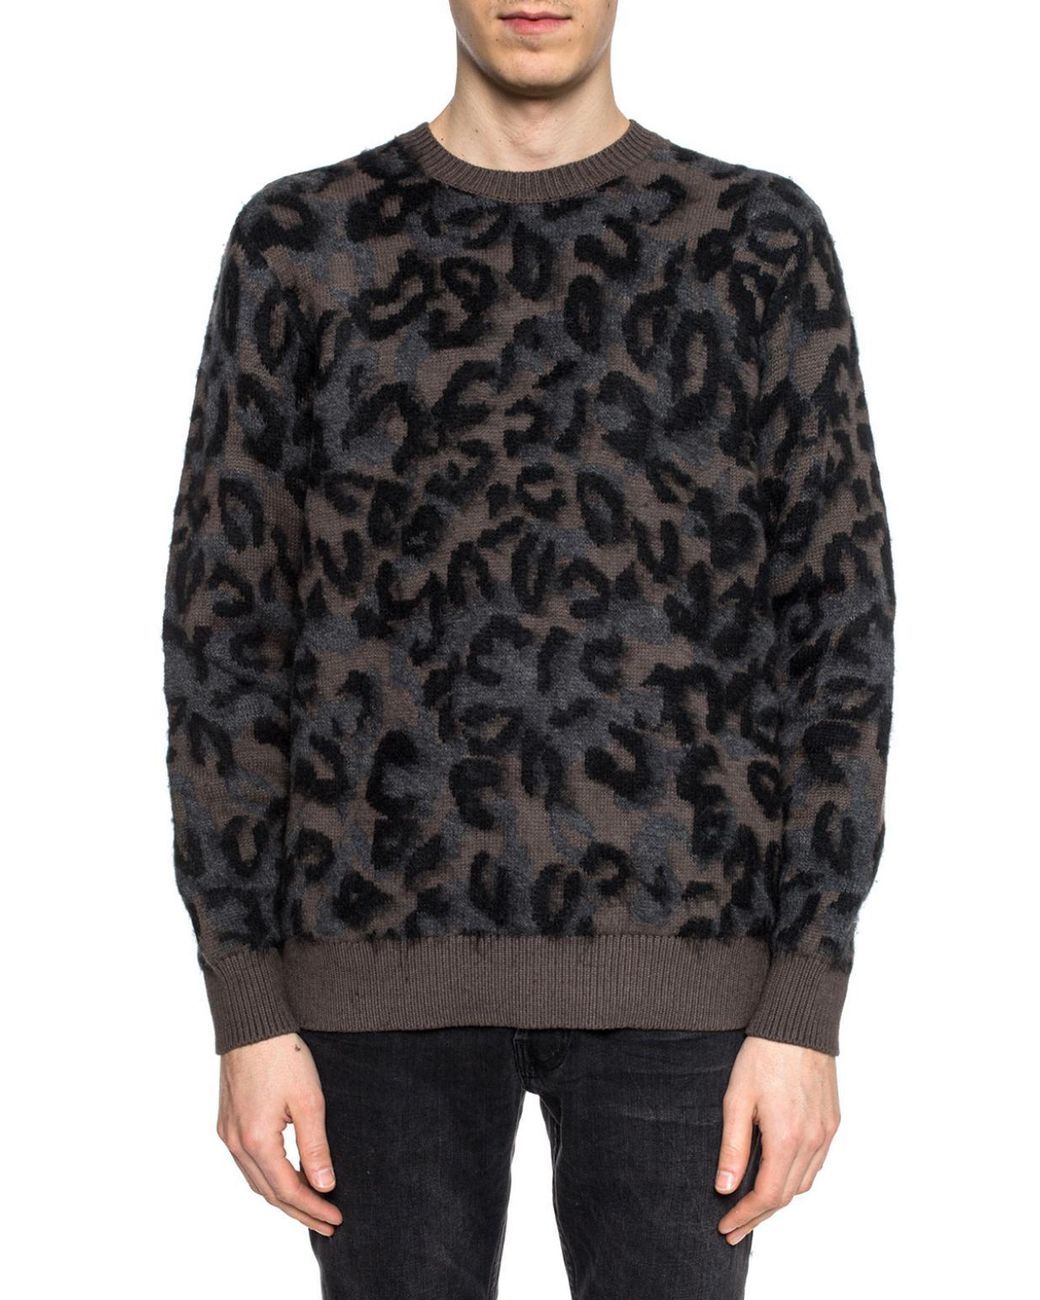 AllSaints 'apex' Leopard Print Sweater in Brown for Men | Lyst UK